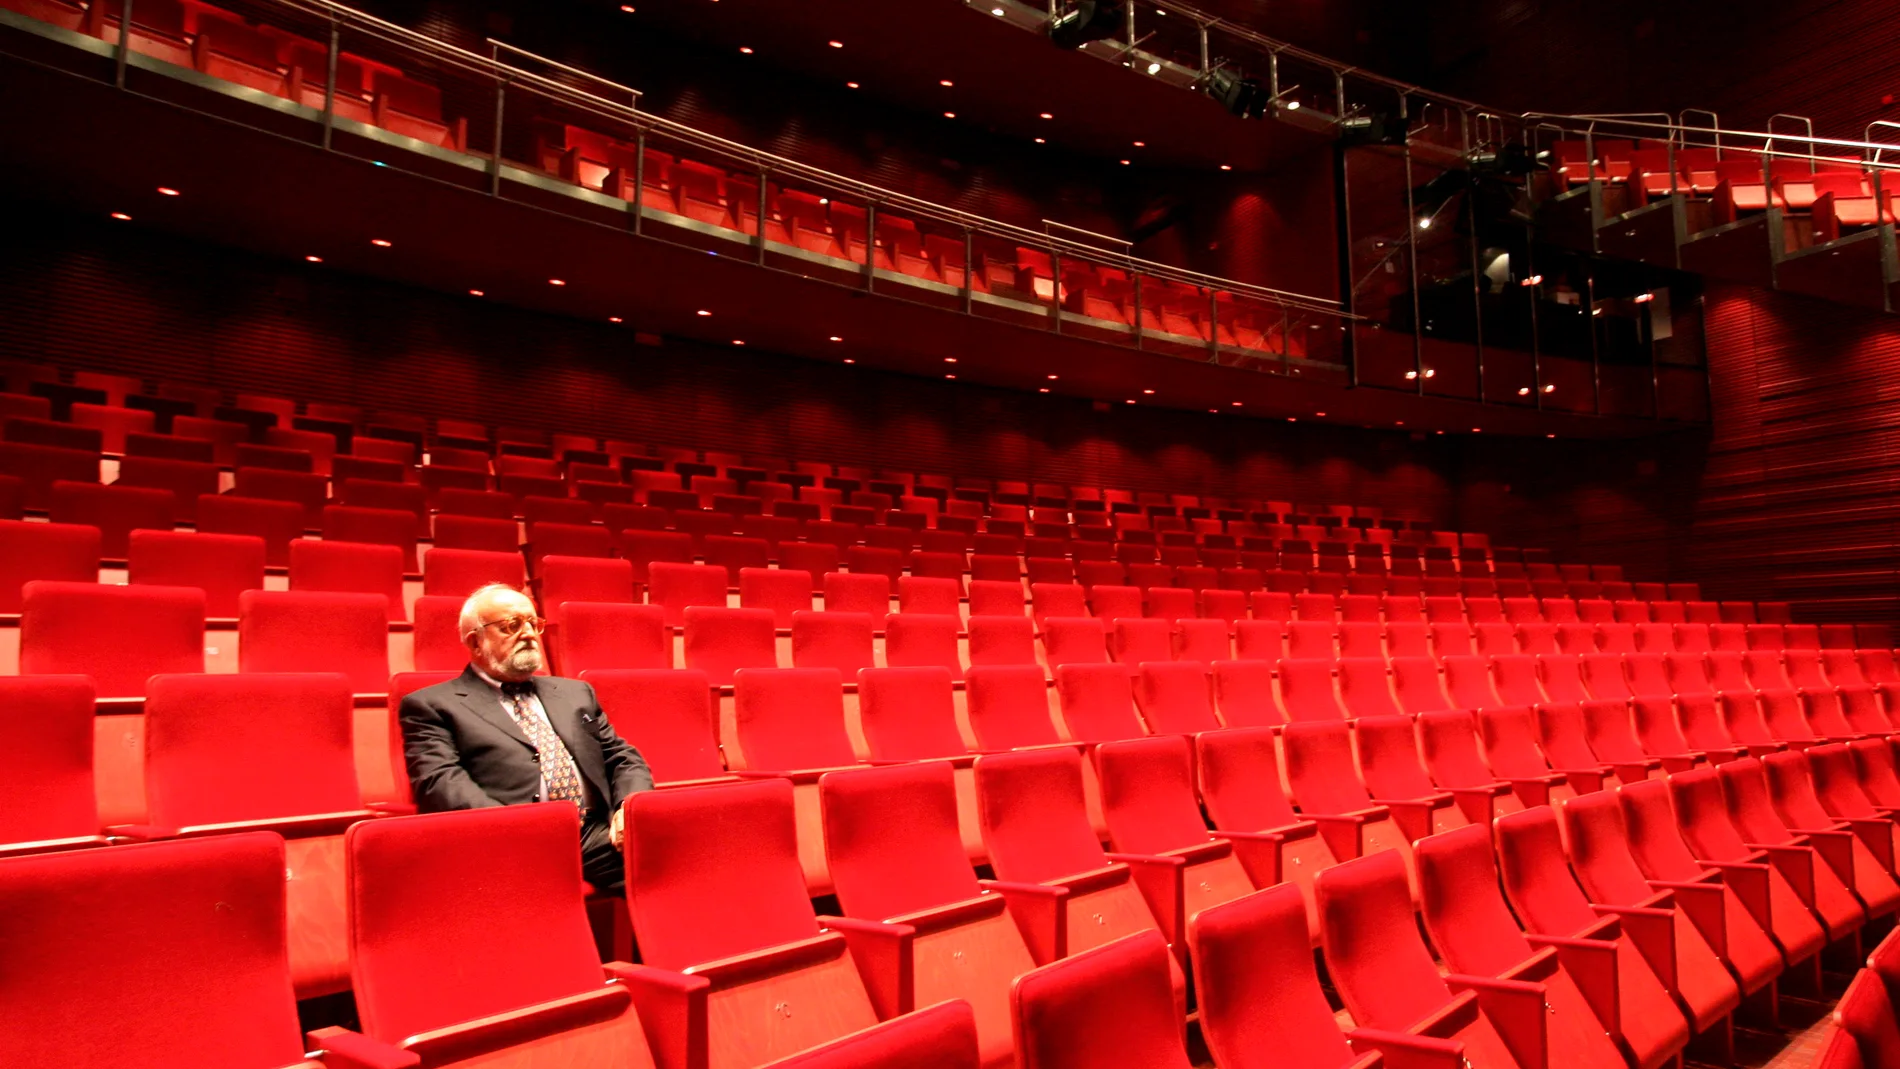 Polish composer Krzysztof Penderecki dies aged 86